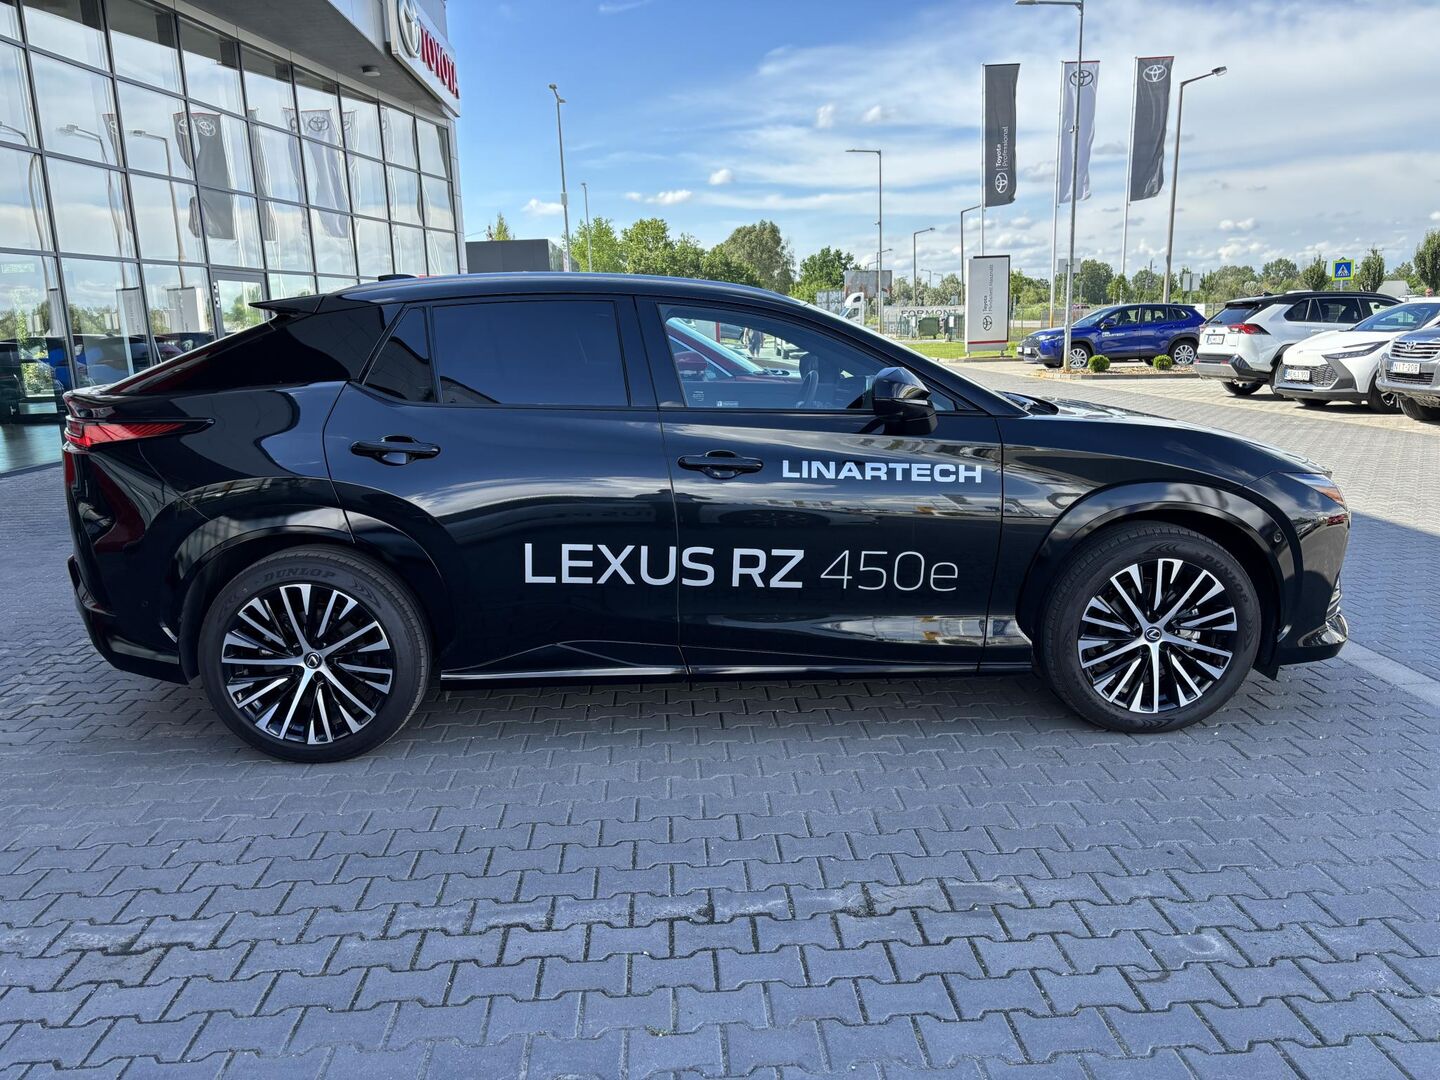 Lexus Rz